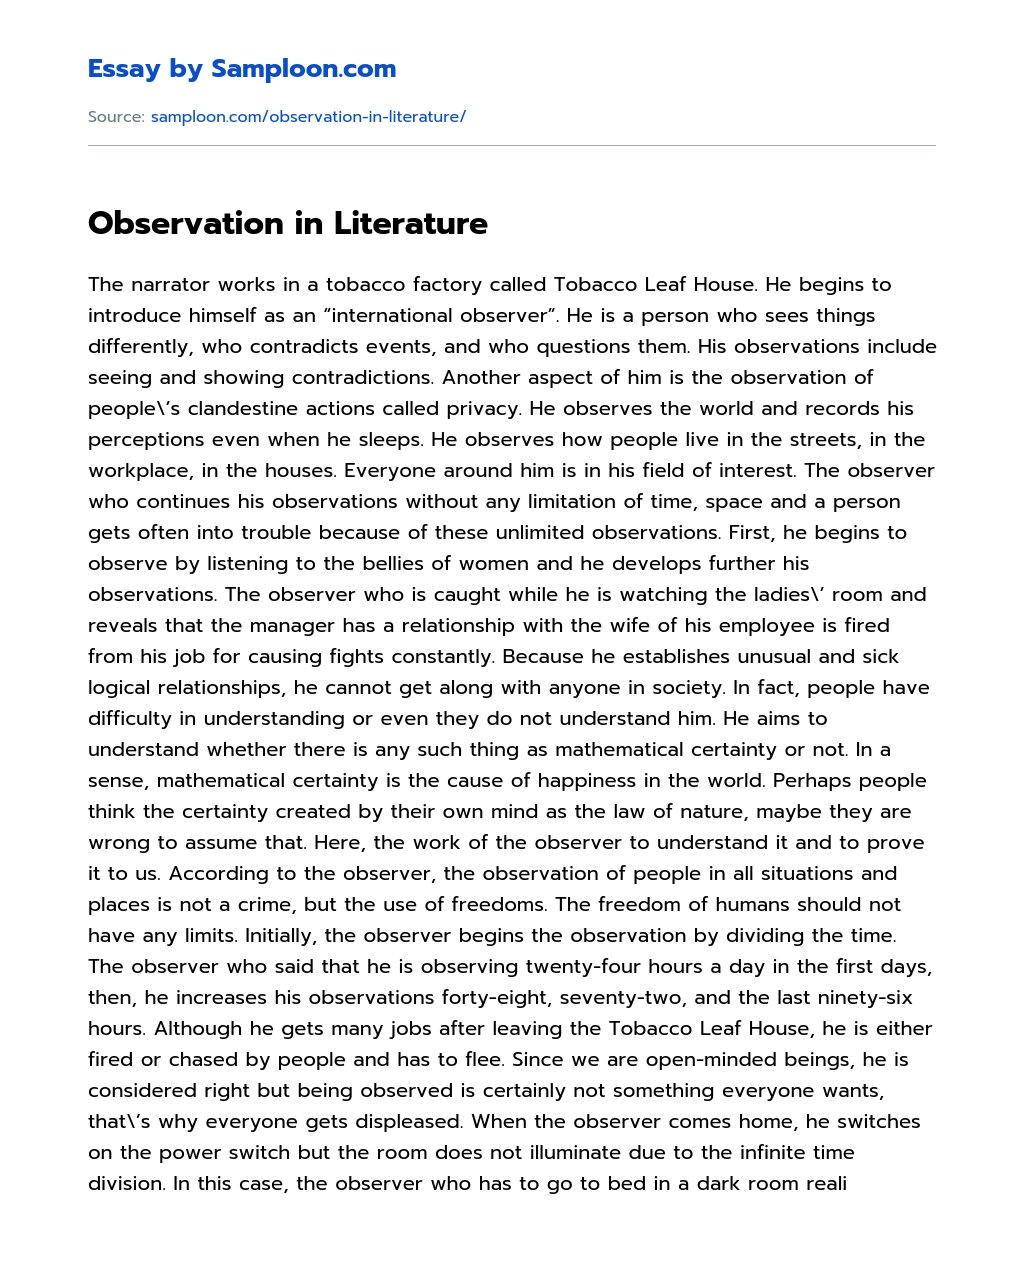 Observation in Literature essay